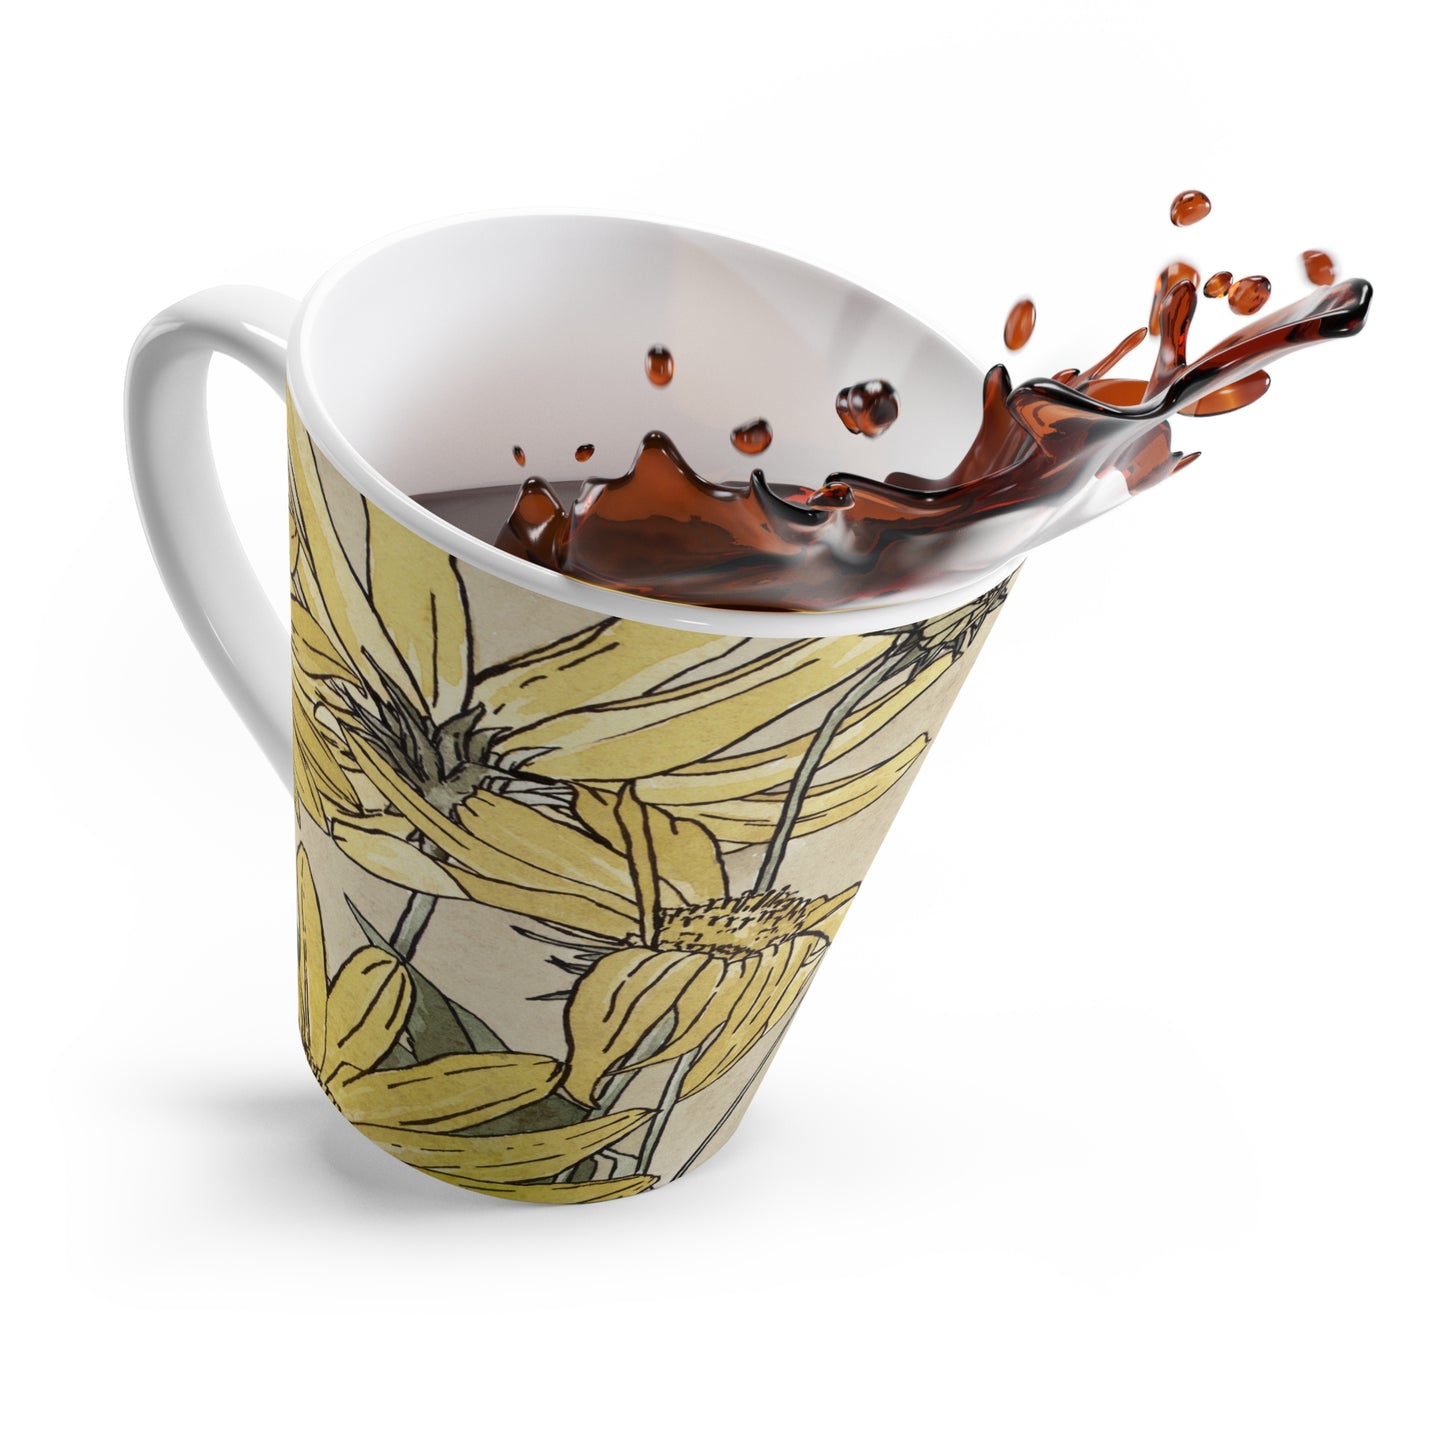 Illustrated Botanica 12 oz. Latte Mug